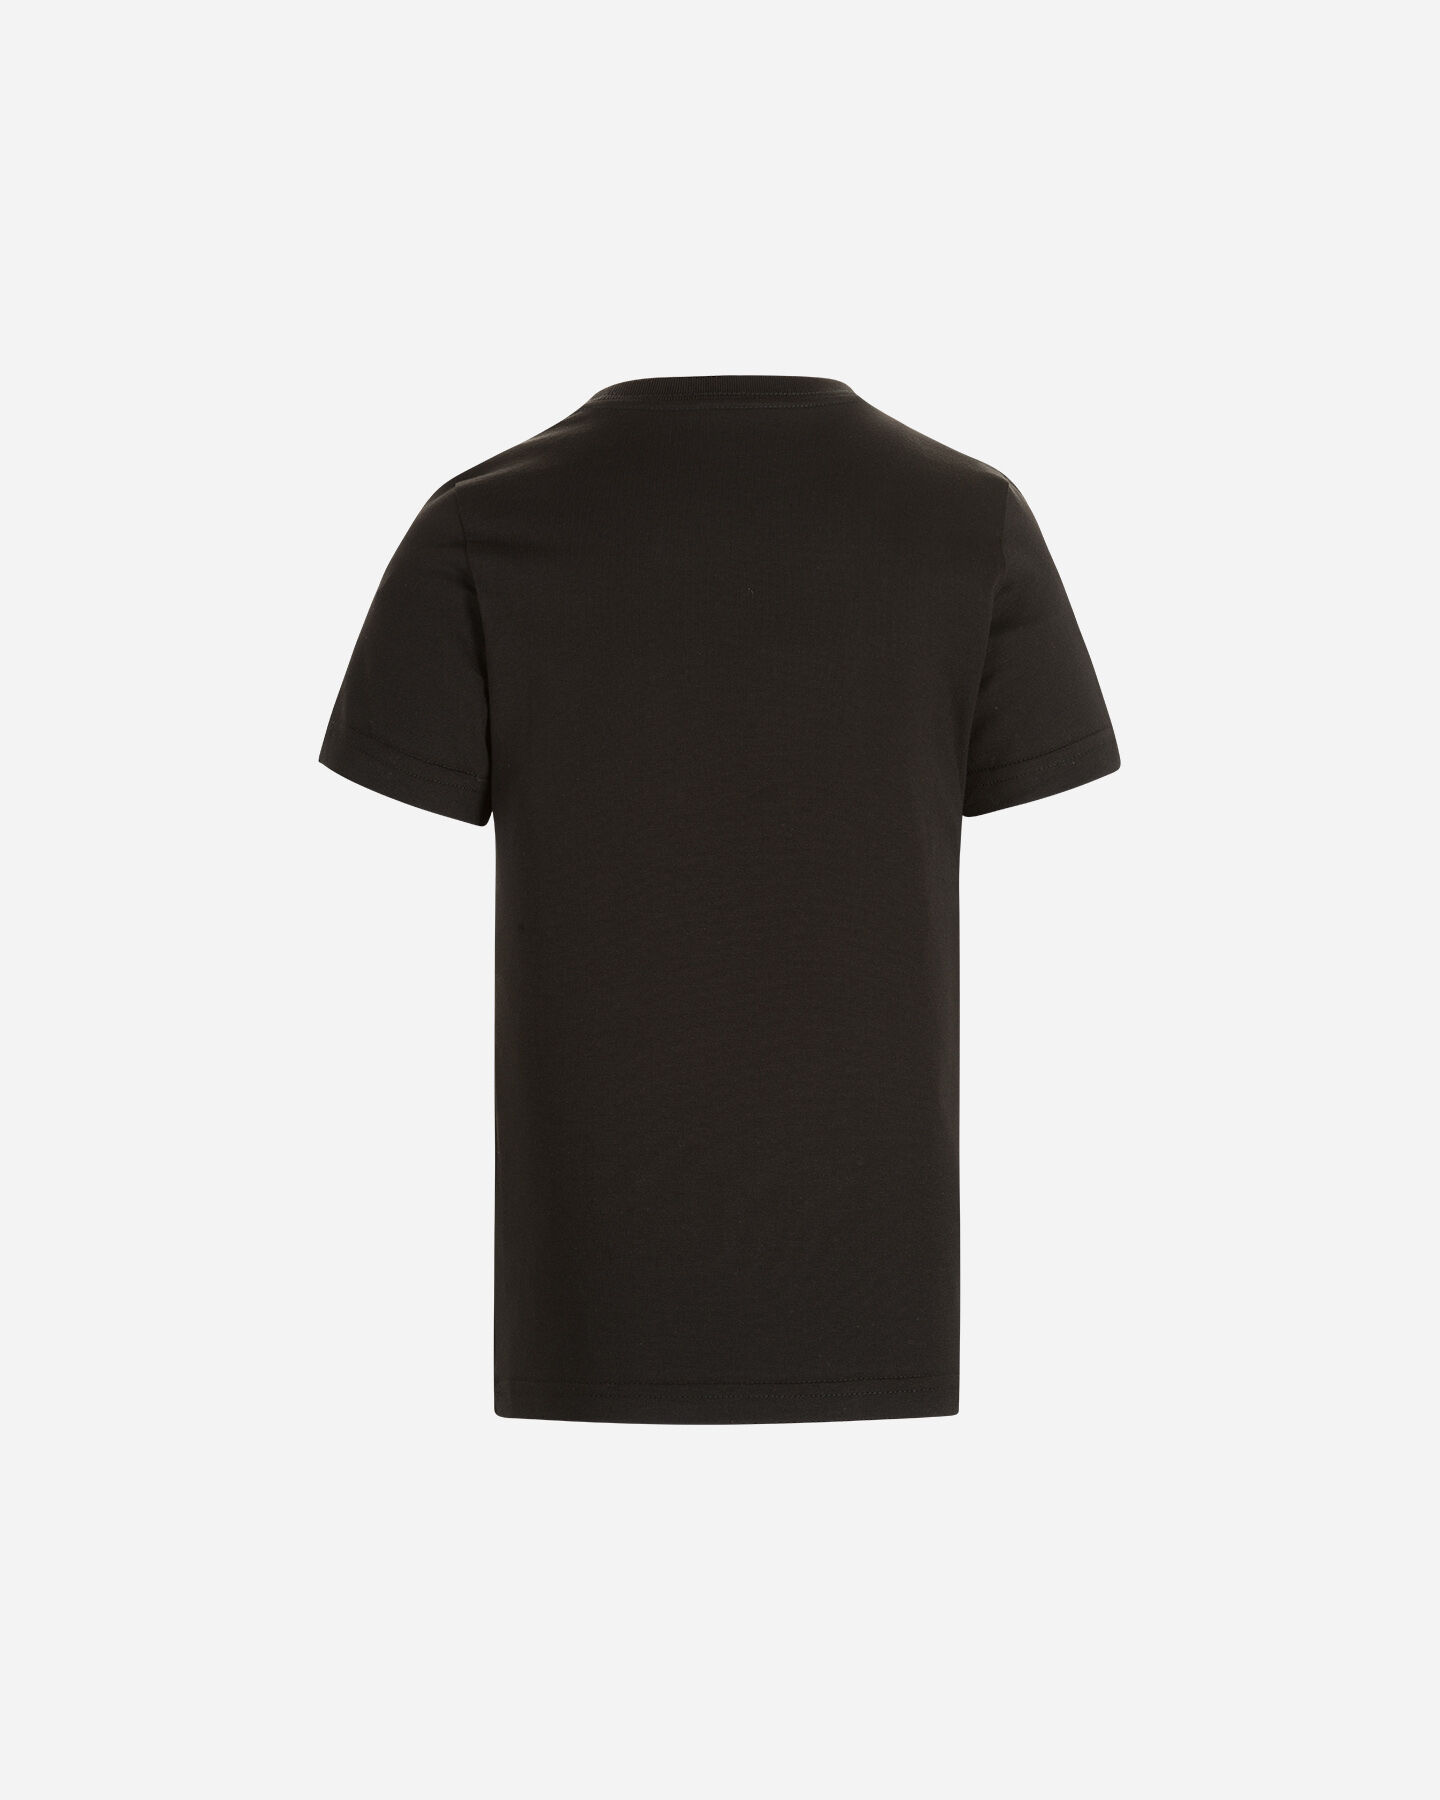  T-Shirt PUMA GRAPHIC BLOCK JR S5503726|01|104 scatto 1